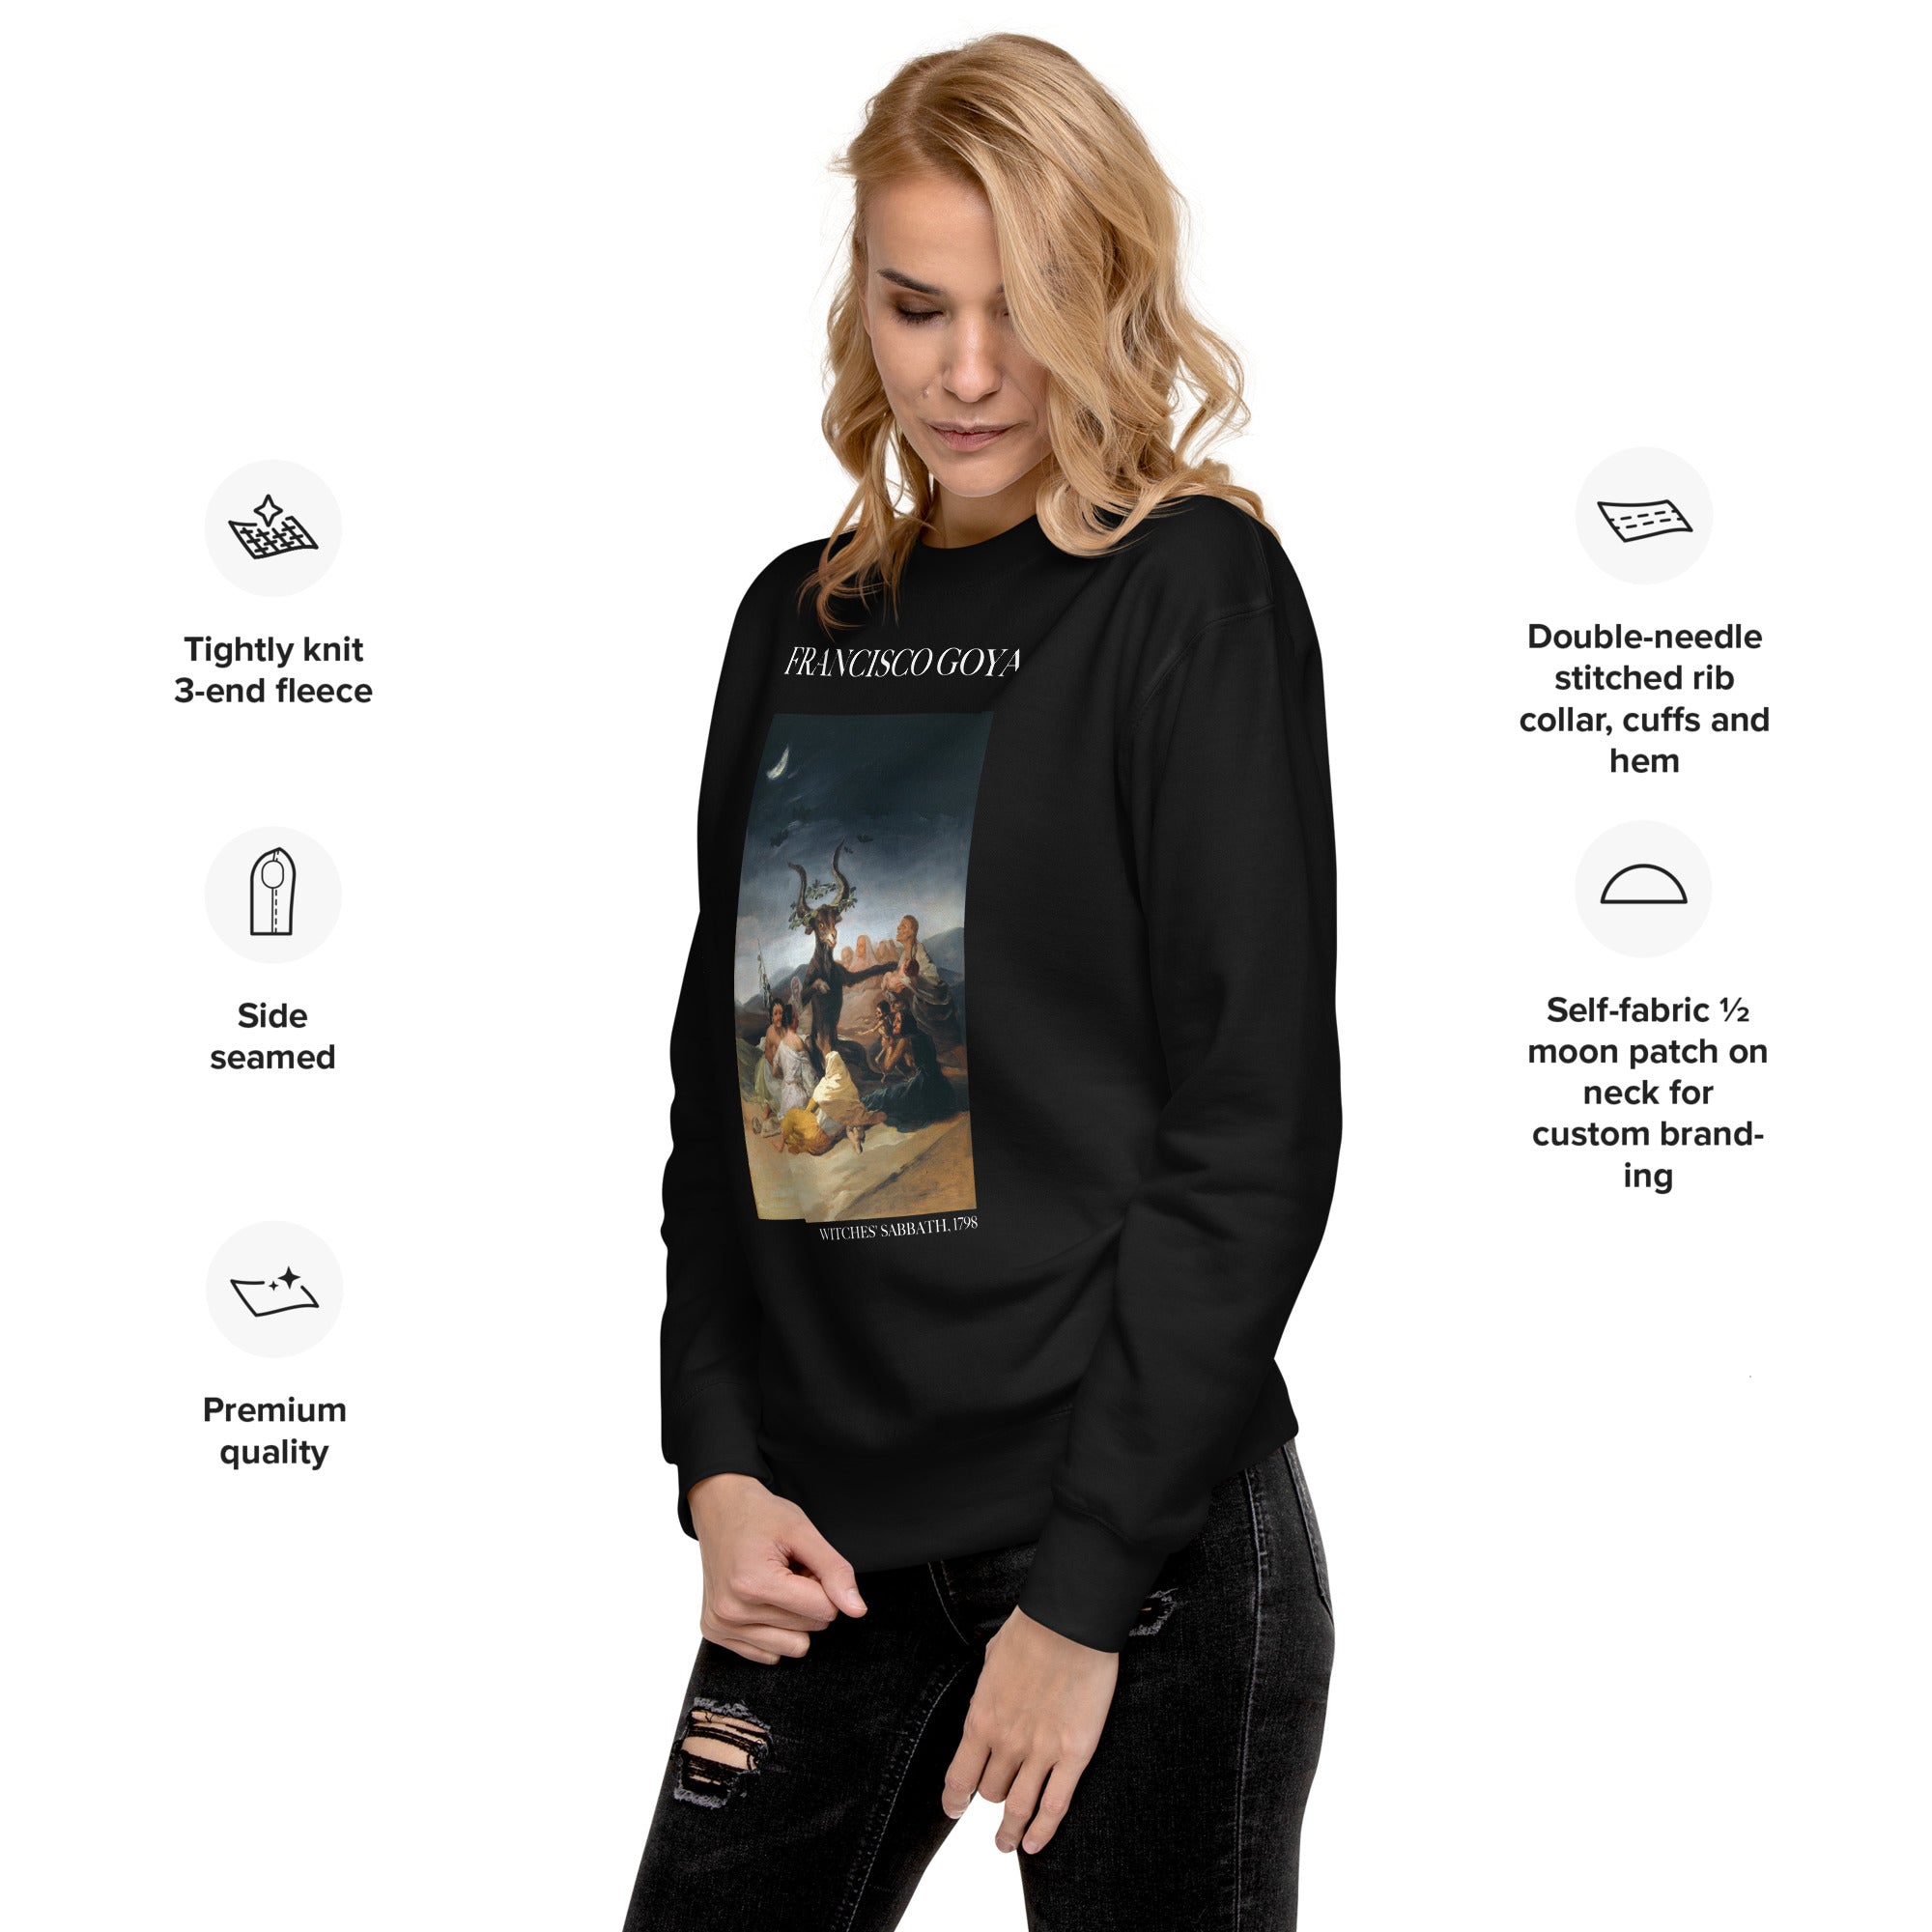 Francisco Goya 'Hexensabbat' Berühmtes Gemälde Sweatshirt | Unisex Premium Sweatshirt